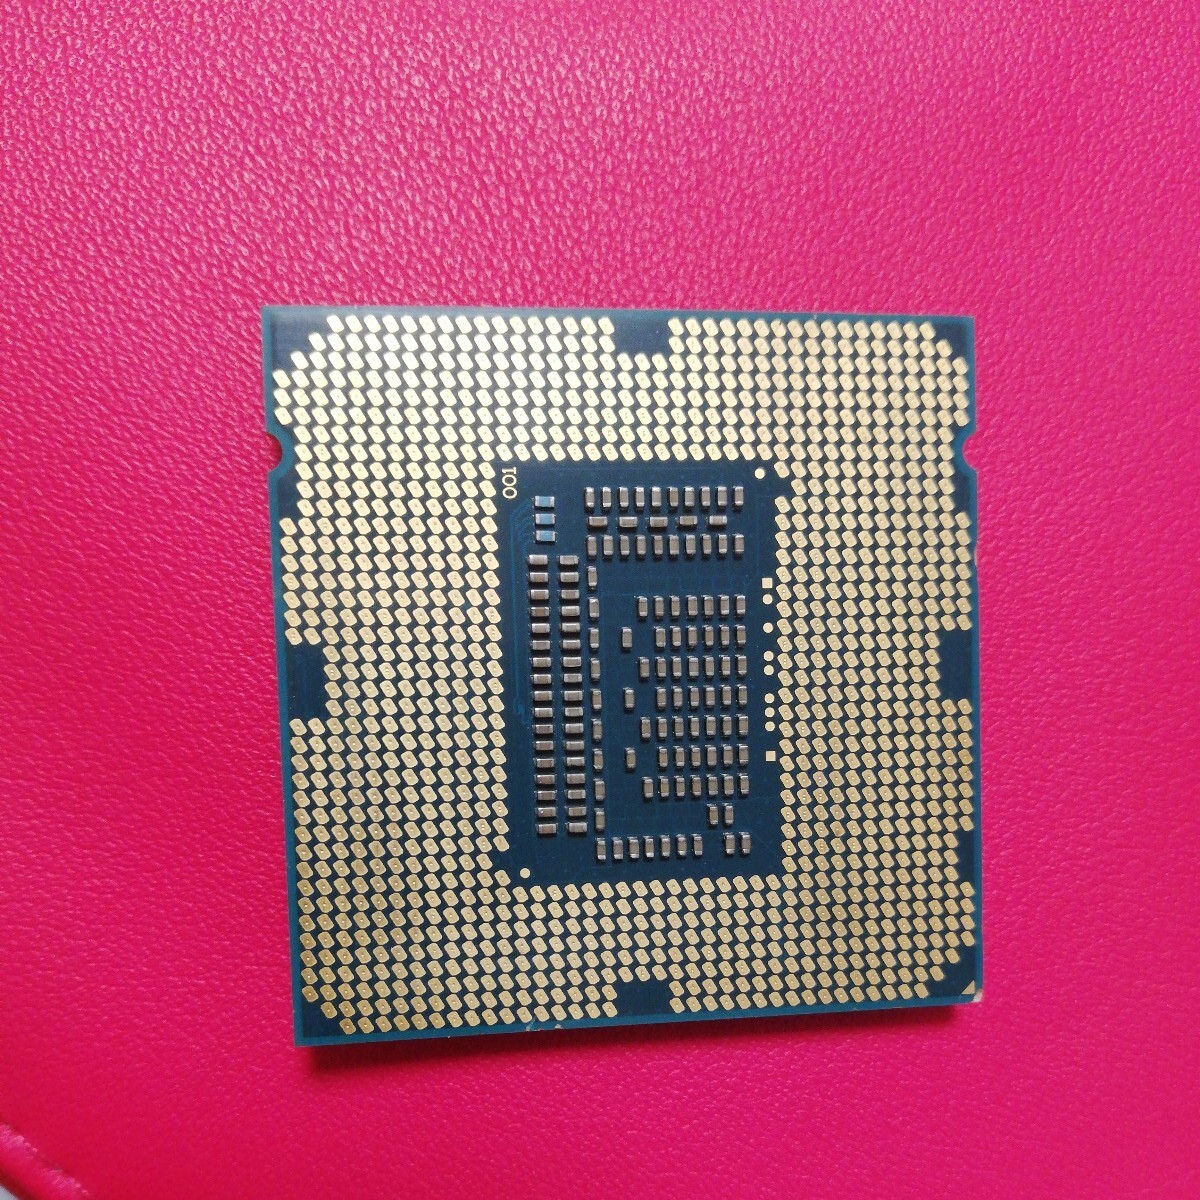 Intel Core i7 3770K SR0PL 3.50GHz